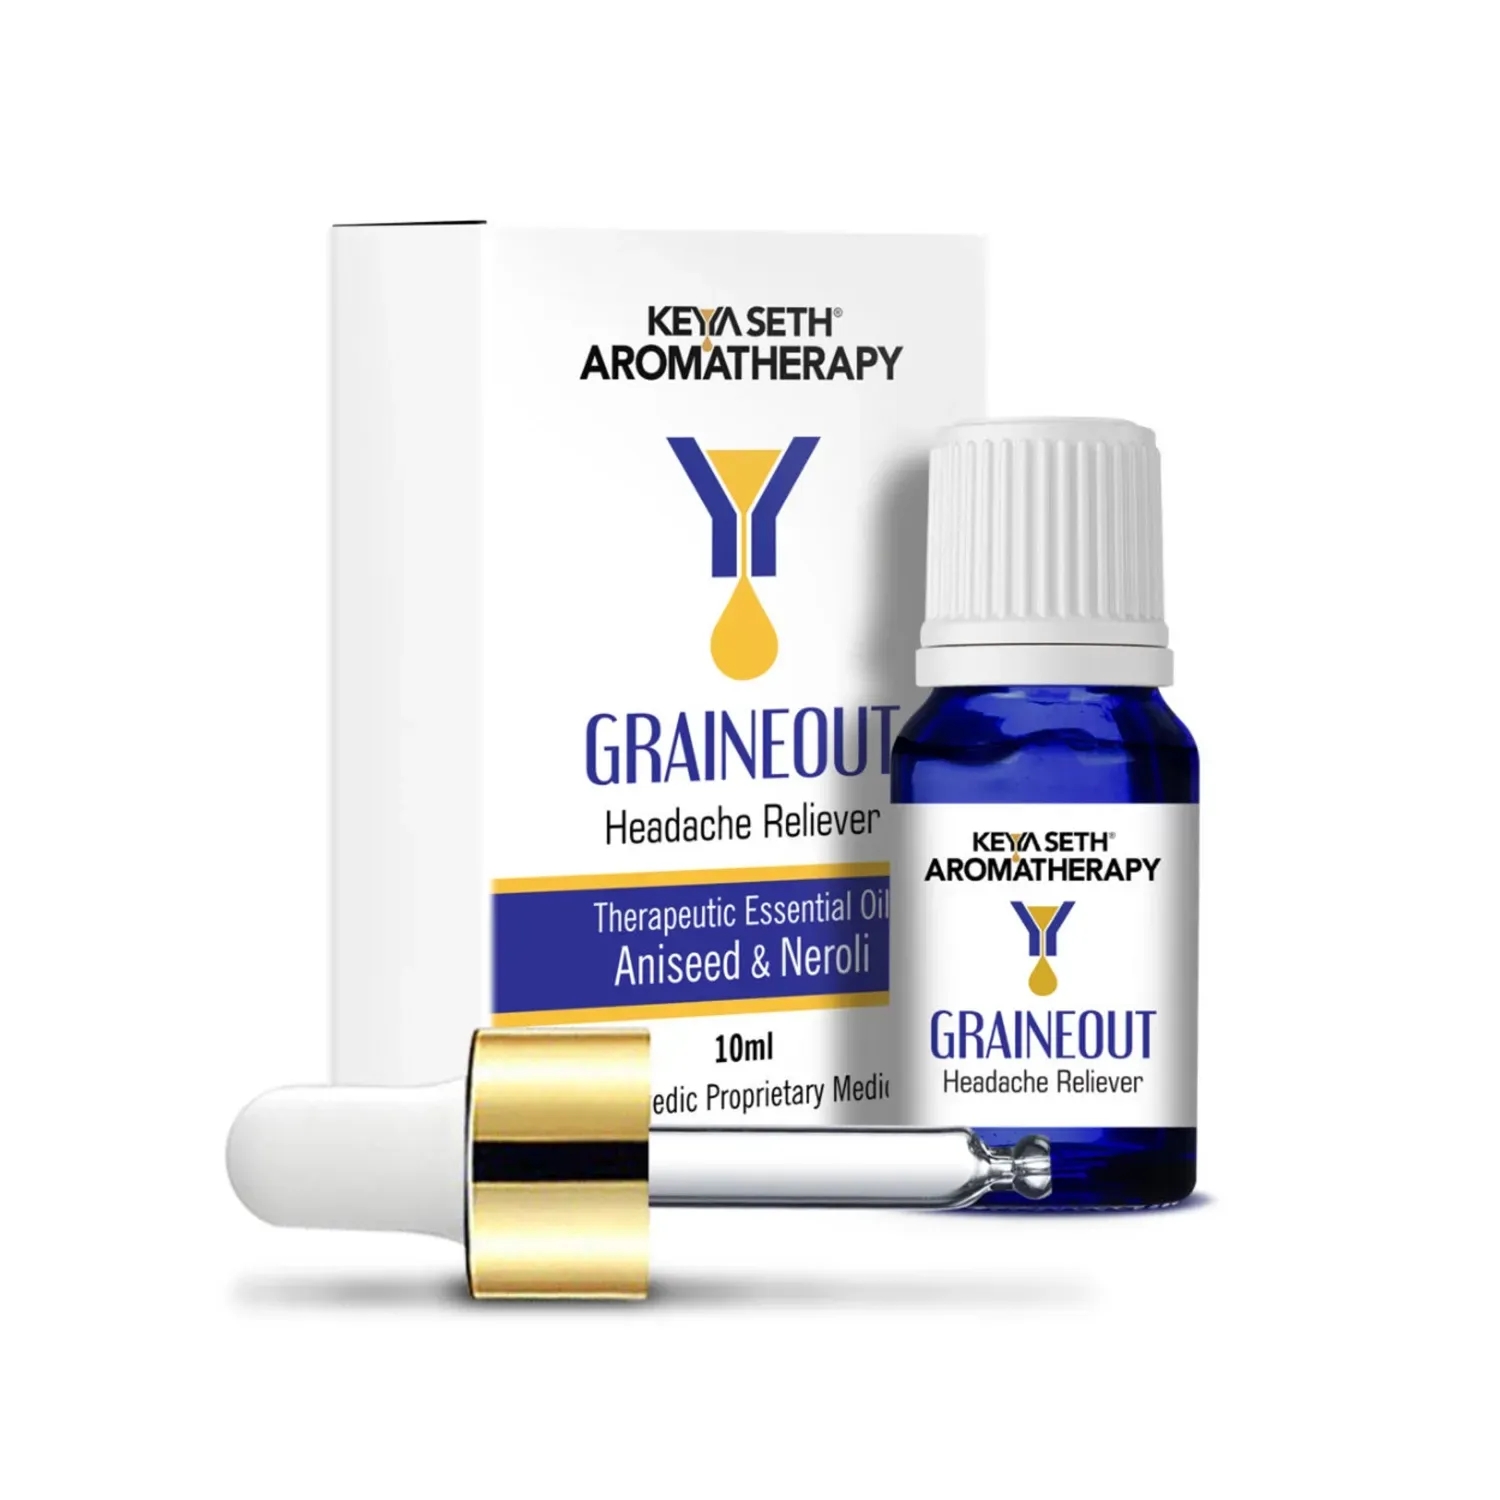 Keya Seth Aromatherapy Graine Out Headache Reliever Essential Oil (10ml)